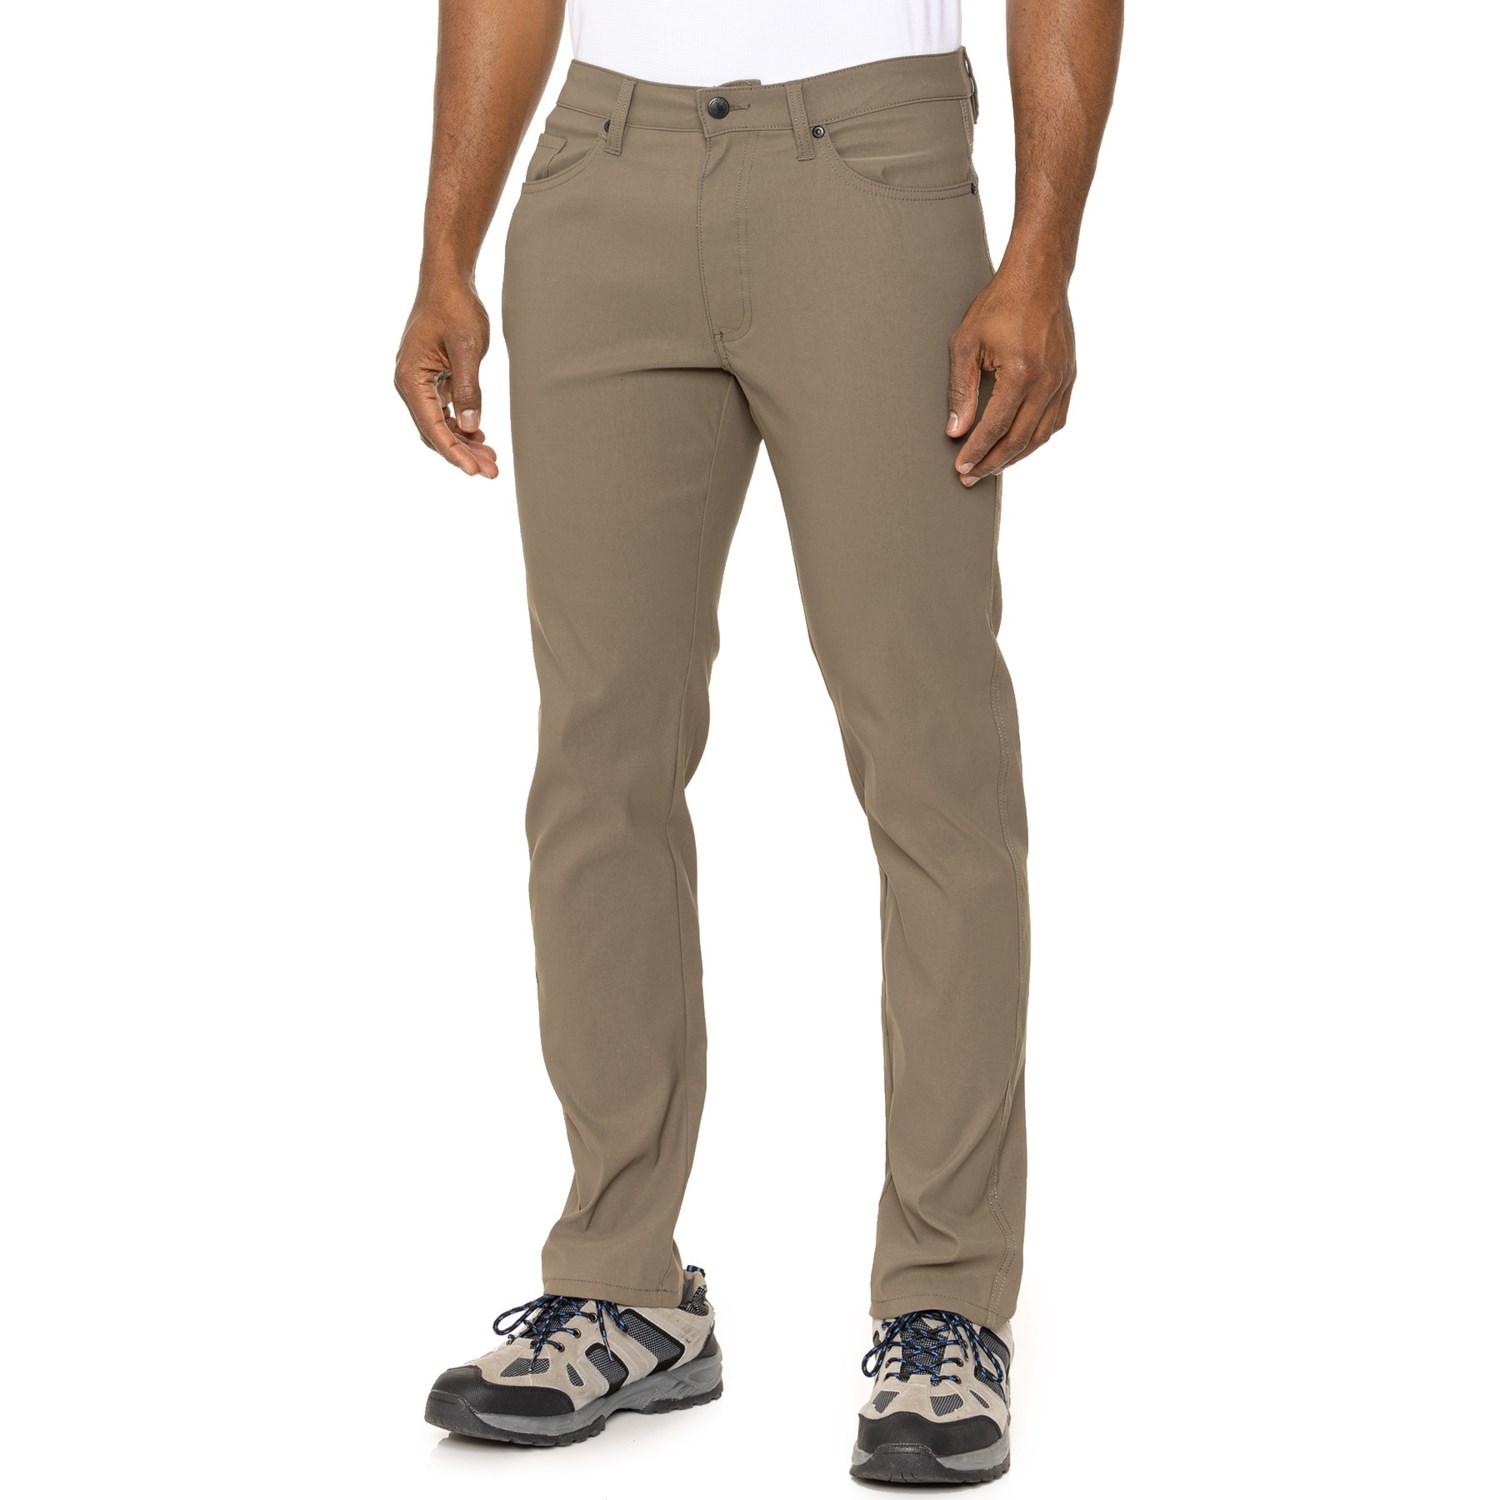 American Outdoorsman Hiking Convertible Pants for Men | Dark Toffee | Size 34/30 | Nylon